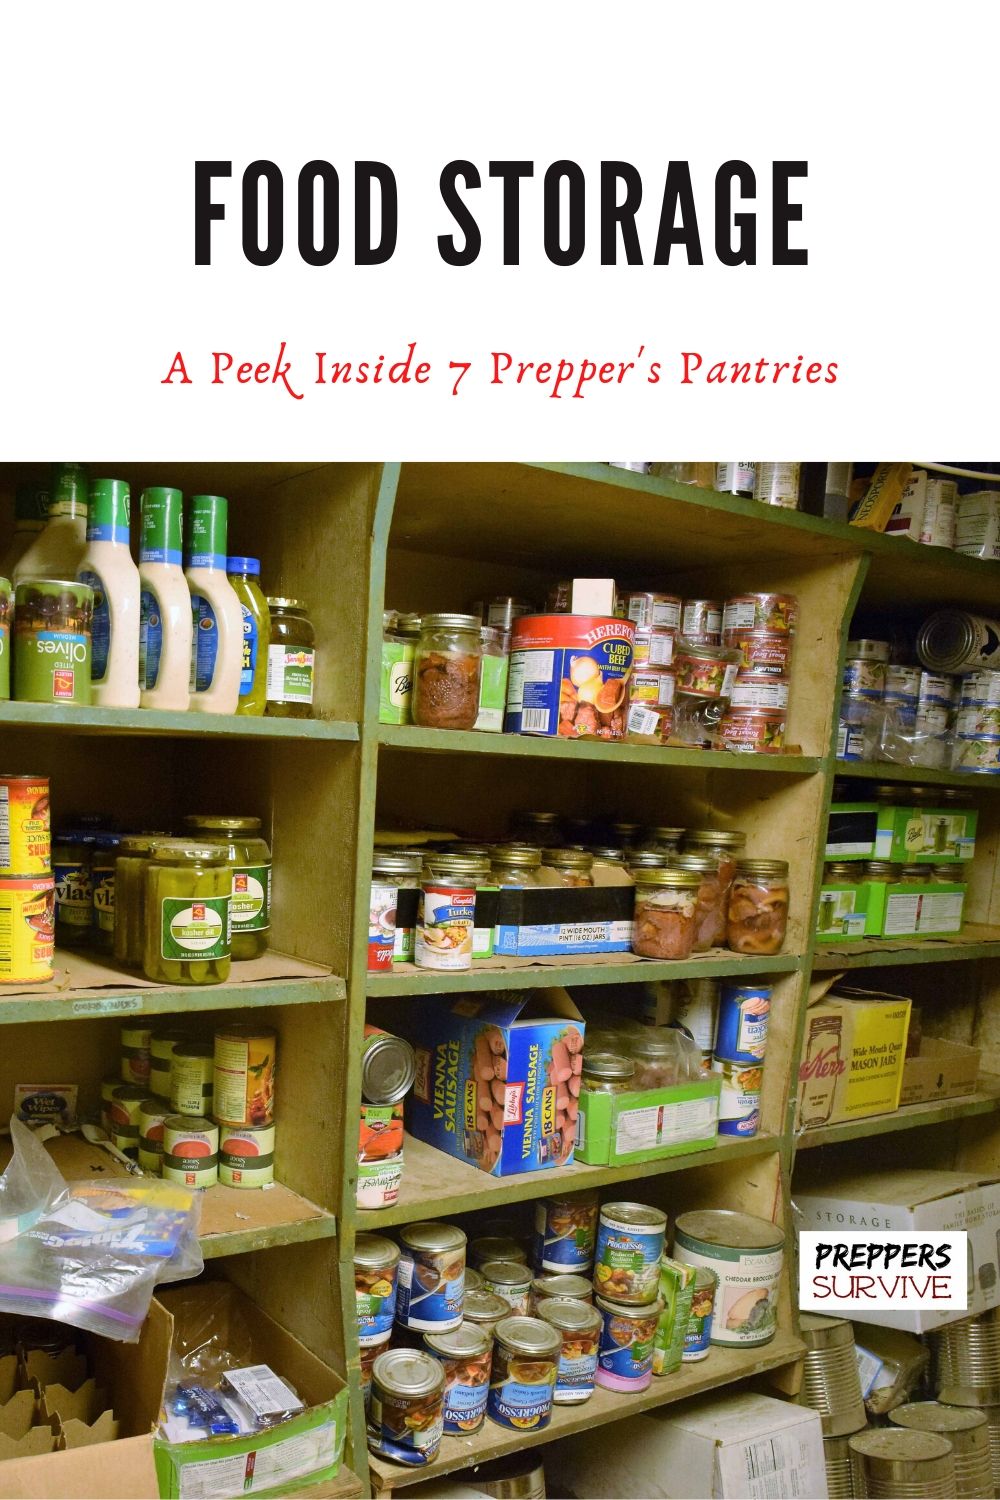 Prepper pantry photos- Food Storage Images 